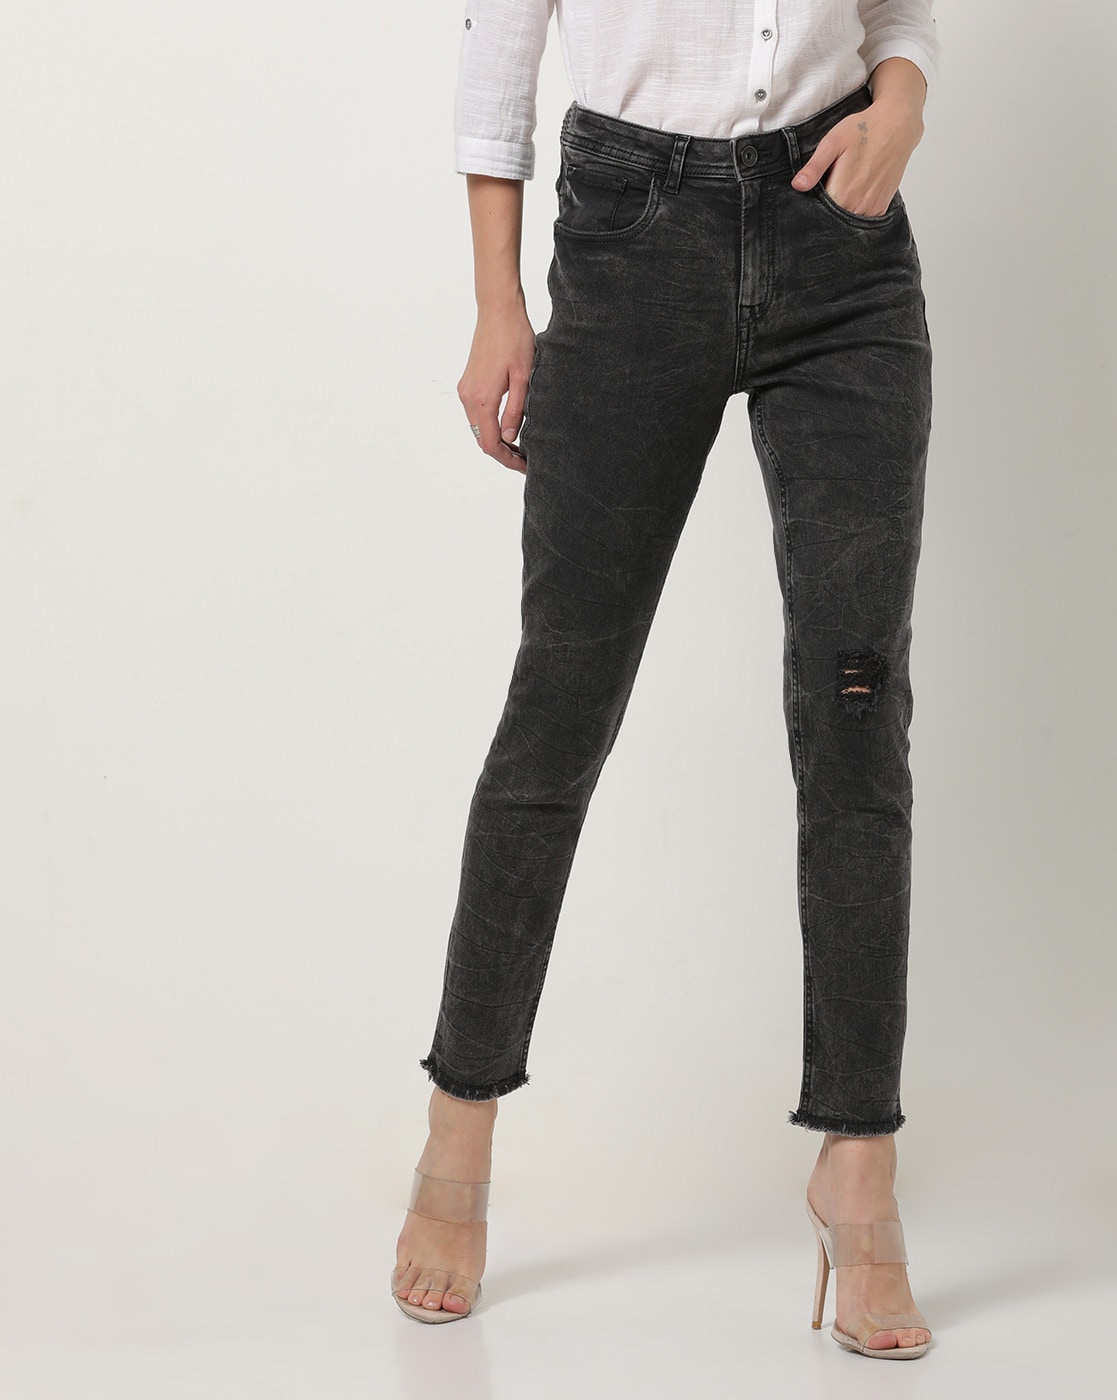 grey slim fit jeans womens